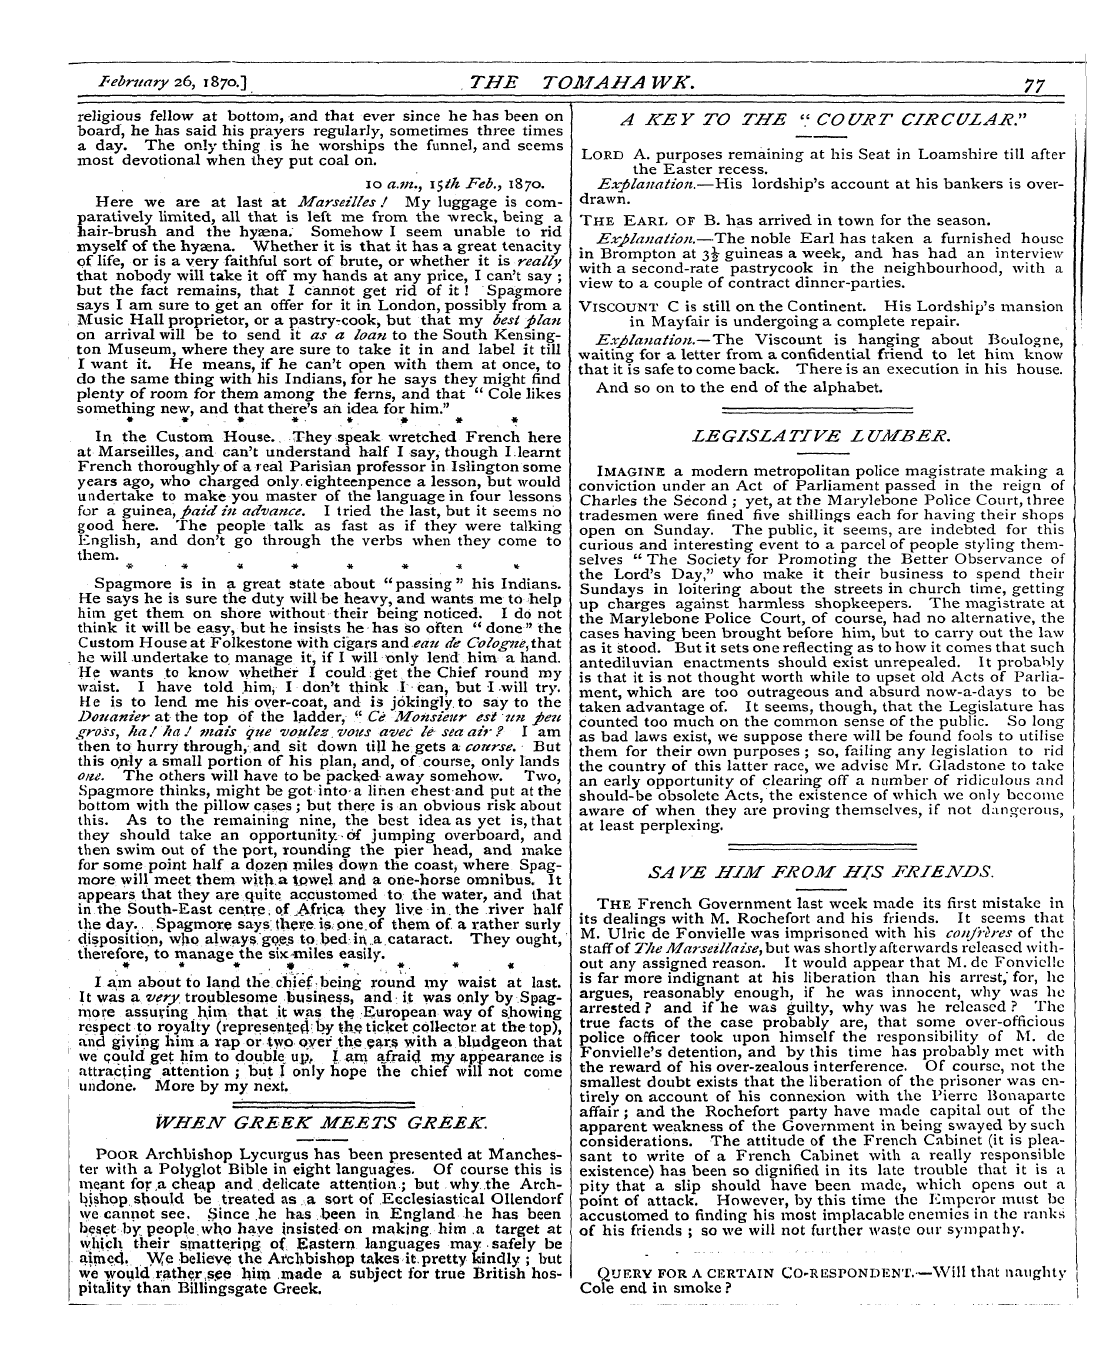 Tomahawk (1867-1870): jS F Y, 1st edition - Imagine A Modern Metropolitan Police Mag...